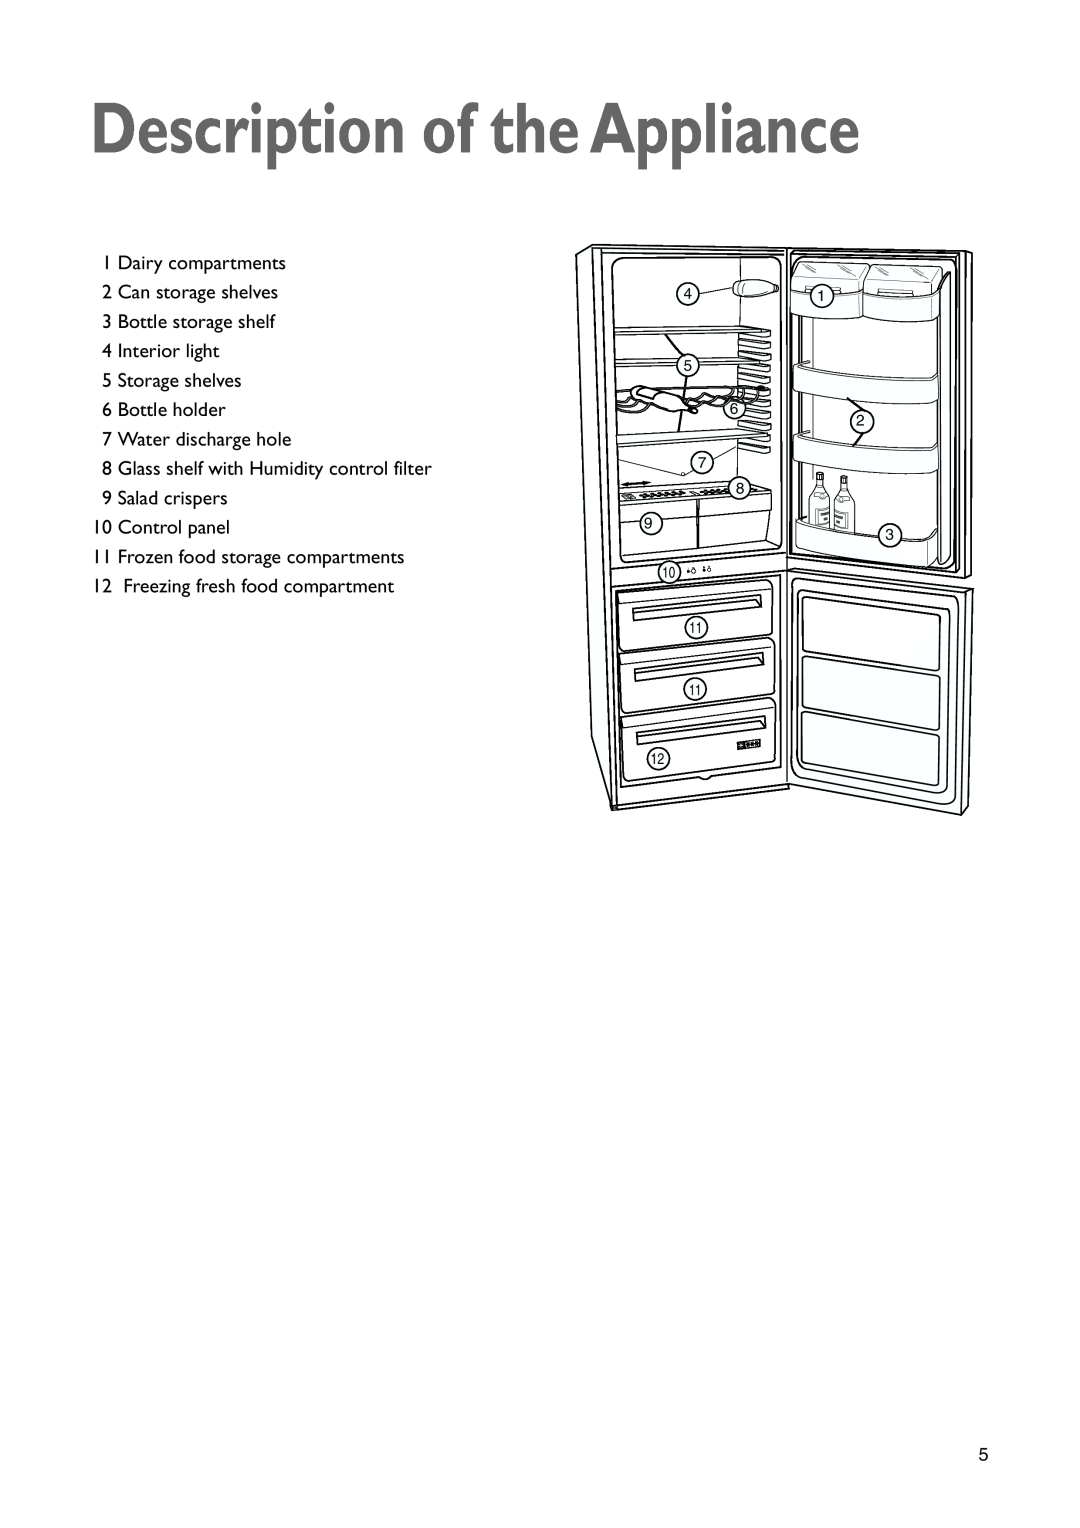 John Lewis JLBIFF 1801 Description of the Appliance, Dairy compartments 2 Can storage shelves 3 Bottle storage shelf 